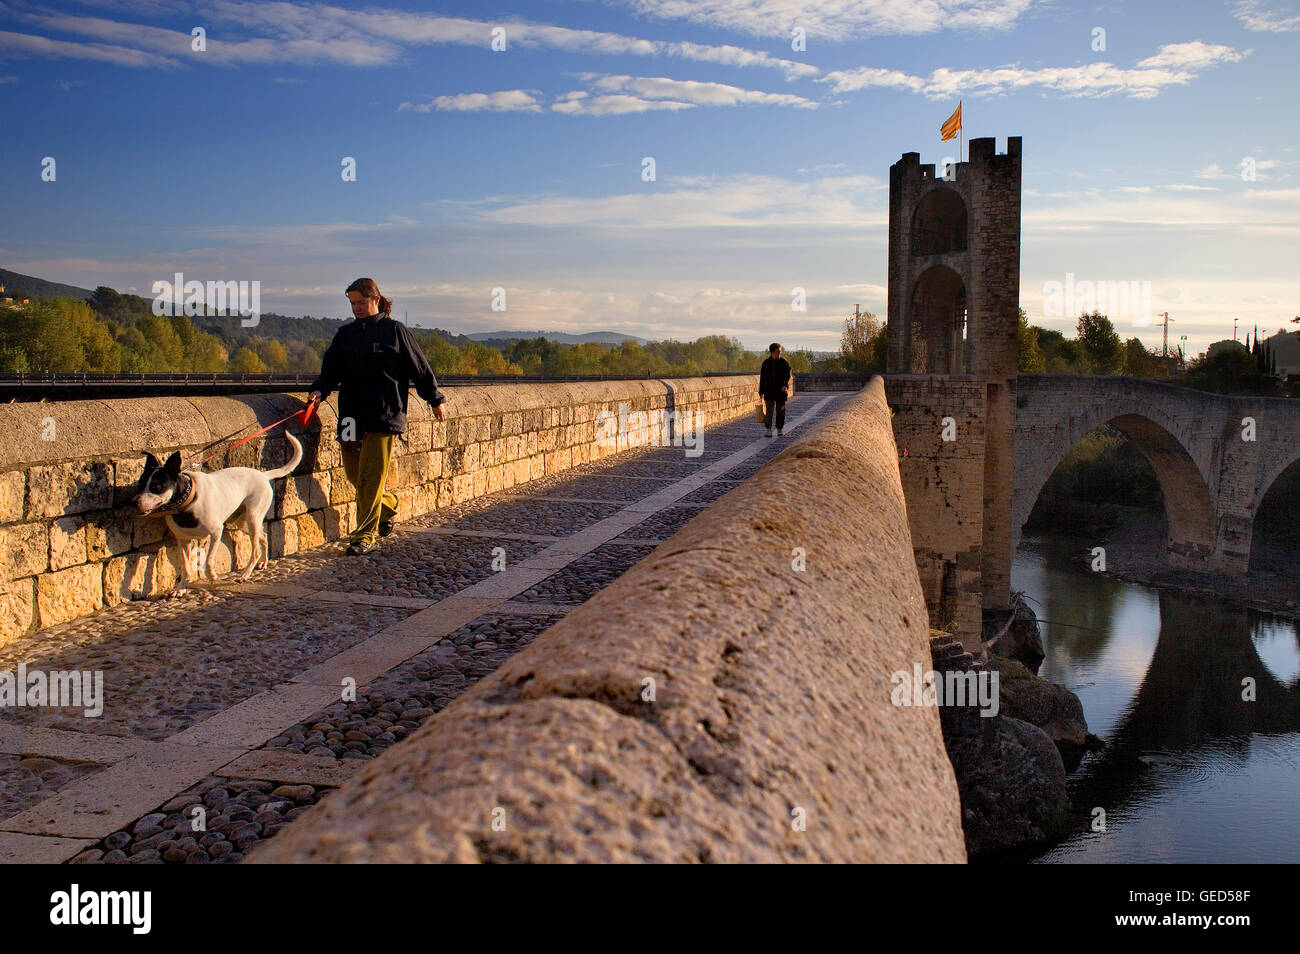 Ponte medievale -11 ° secolo, Besalú, La Garrotxa, Girona, Spagna Foto Stock